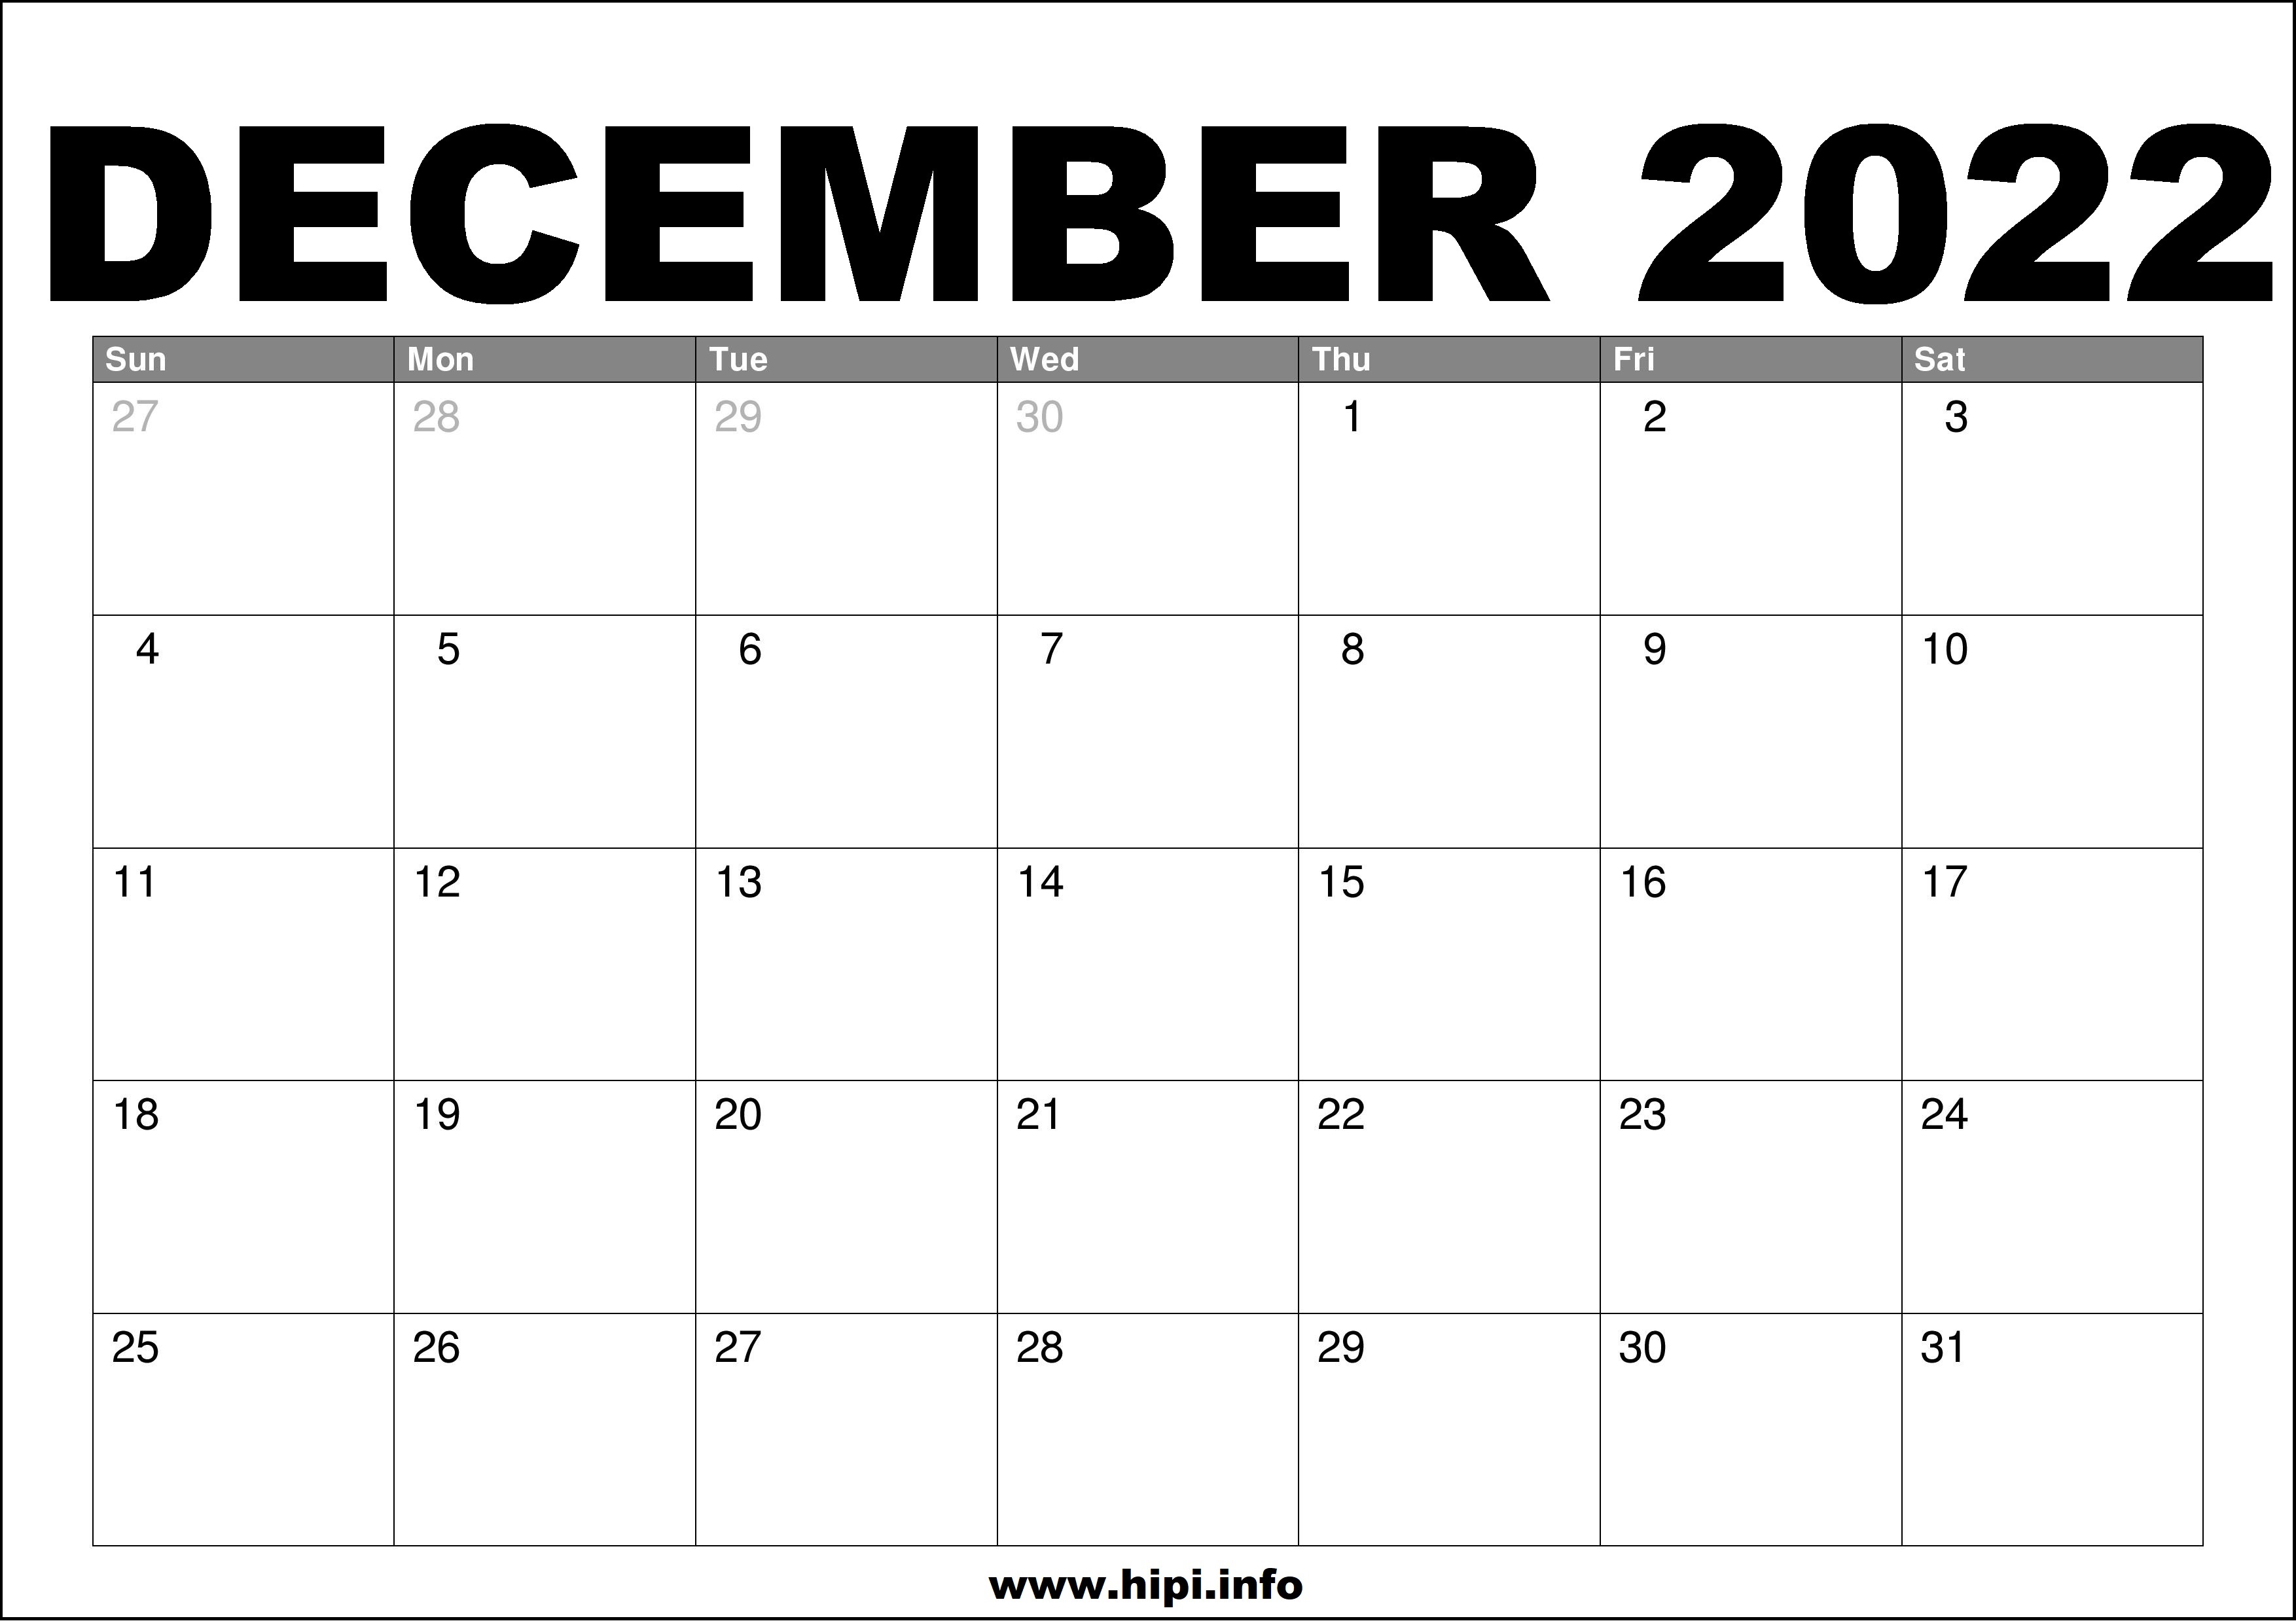 December 2022 Calendar Printable Free December 2022 Calendar Printable Free - Hipi.info | Calendars Printable Free